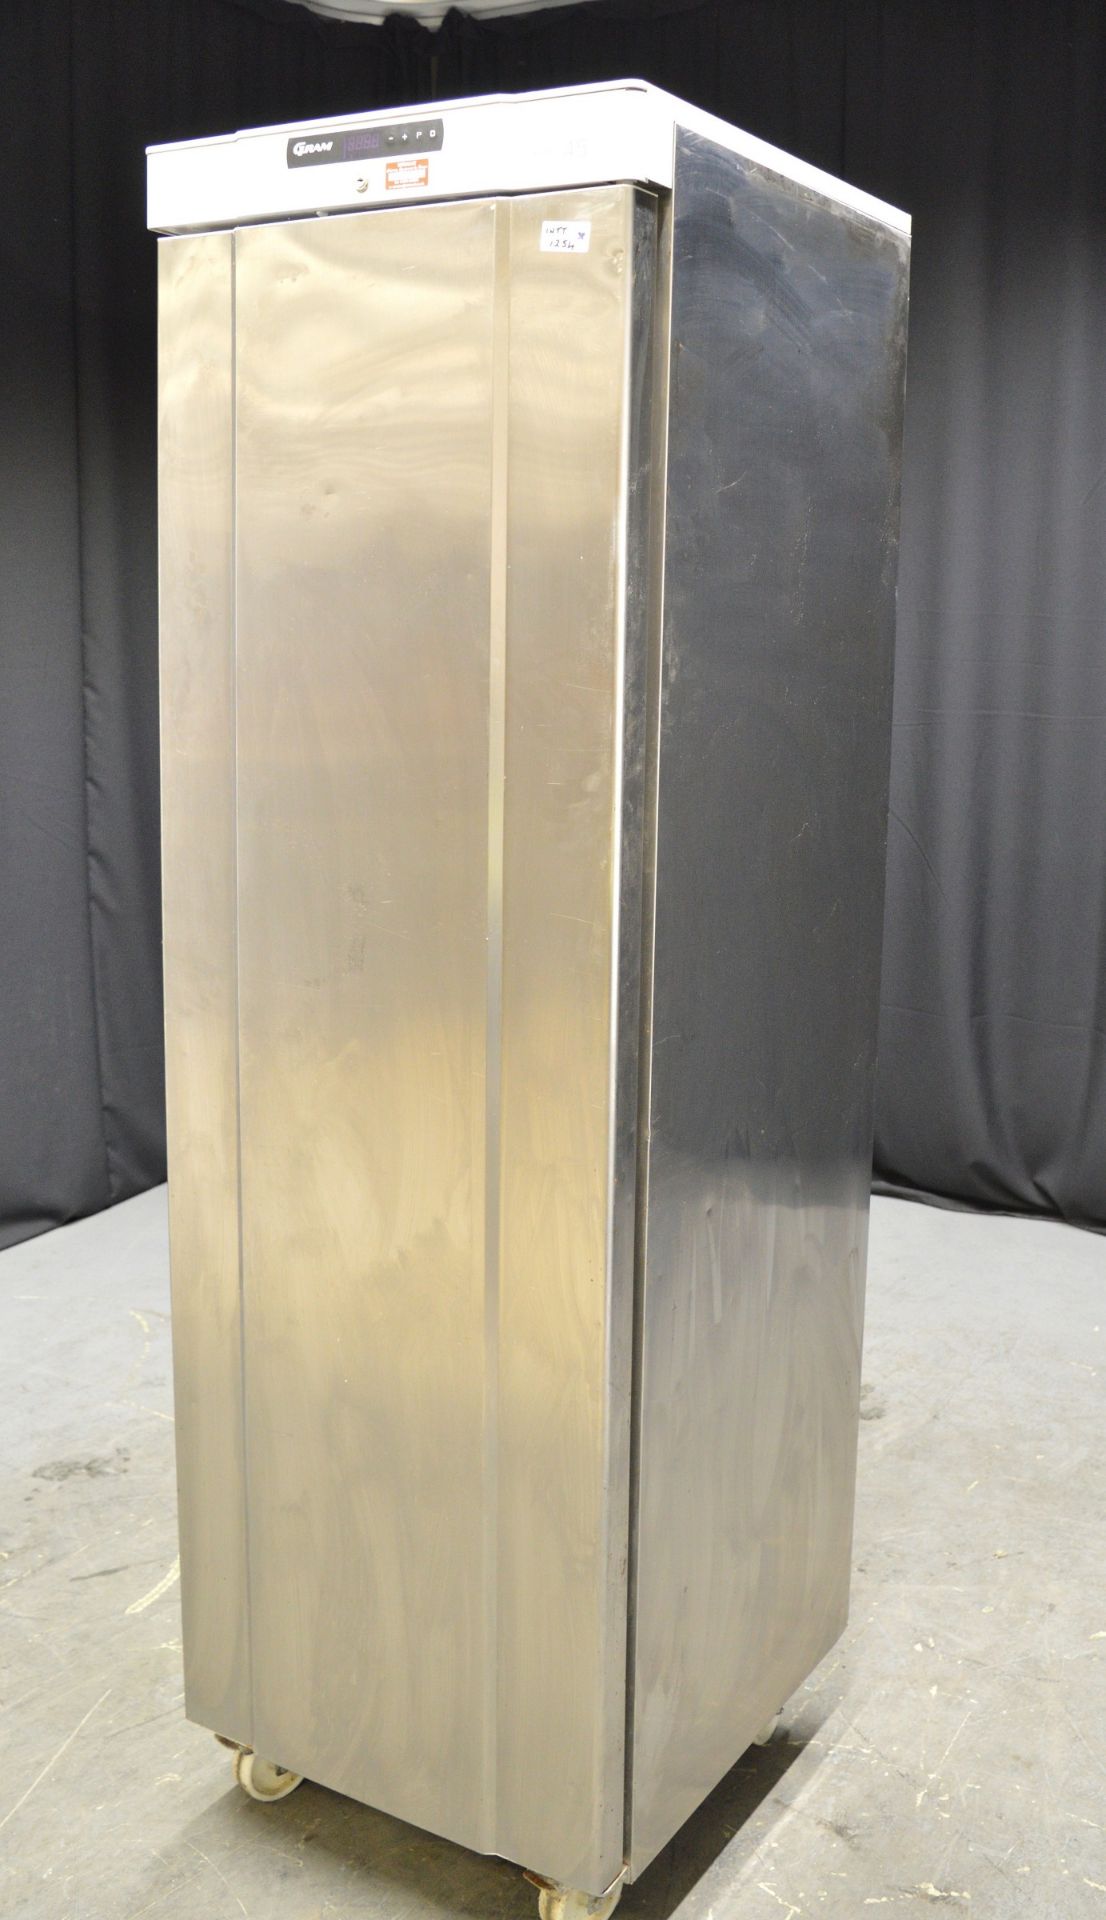 Gram K410 RG C 6N Stainless Steel Upright Refrigerator - Image 3 of 7